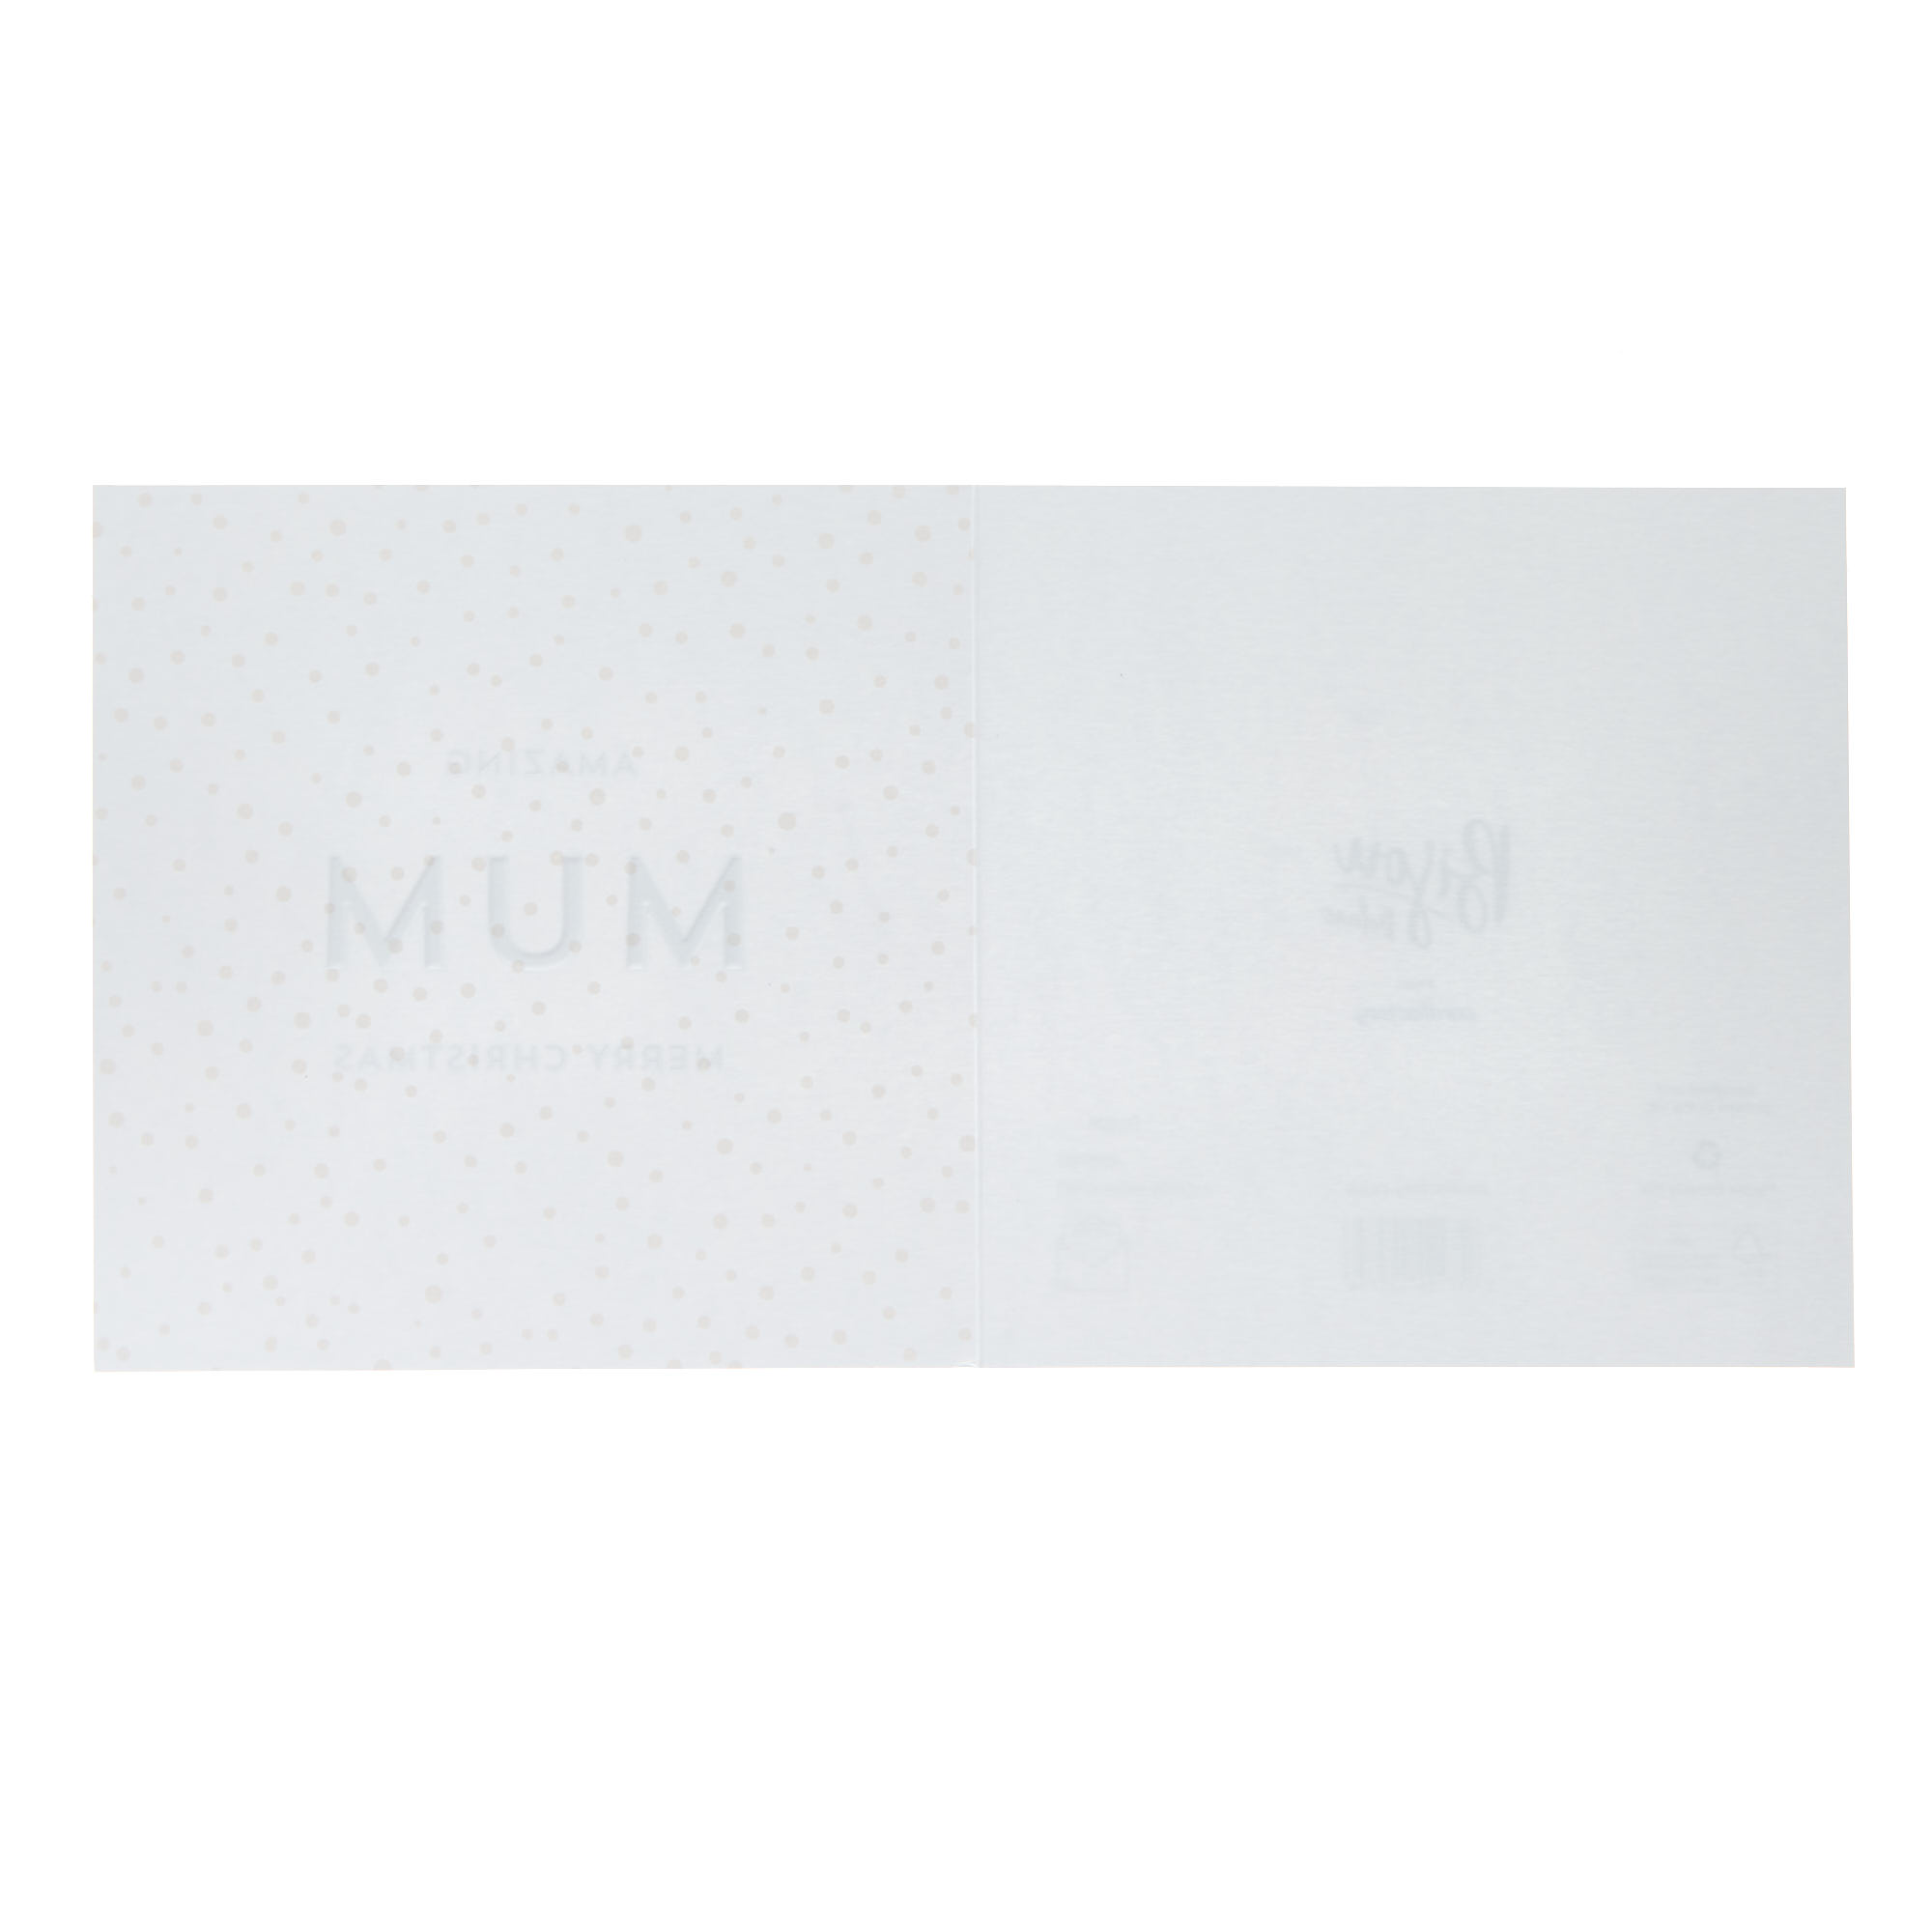 Mum Modern Snowflake Christmas Card